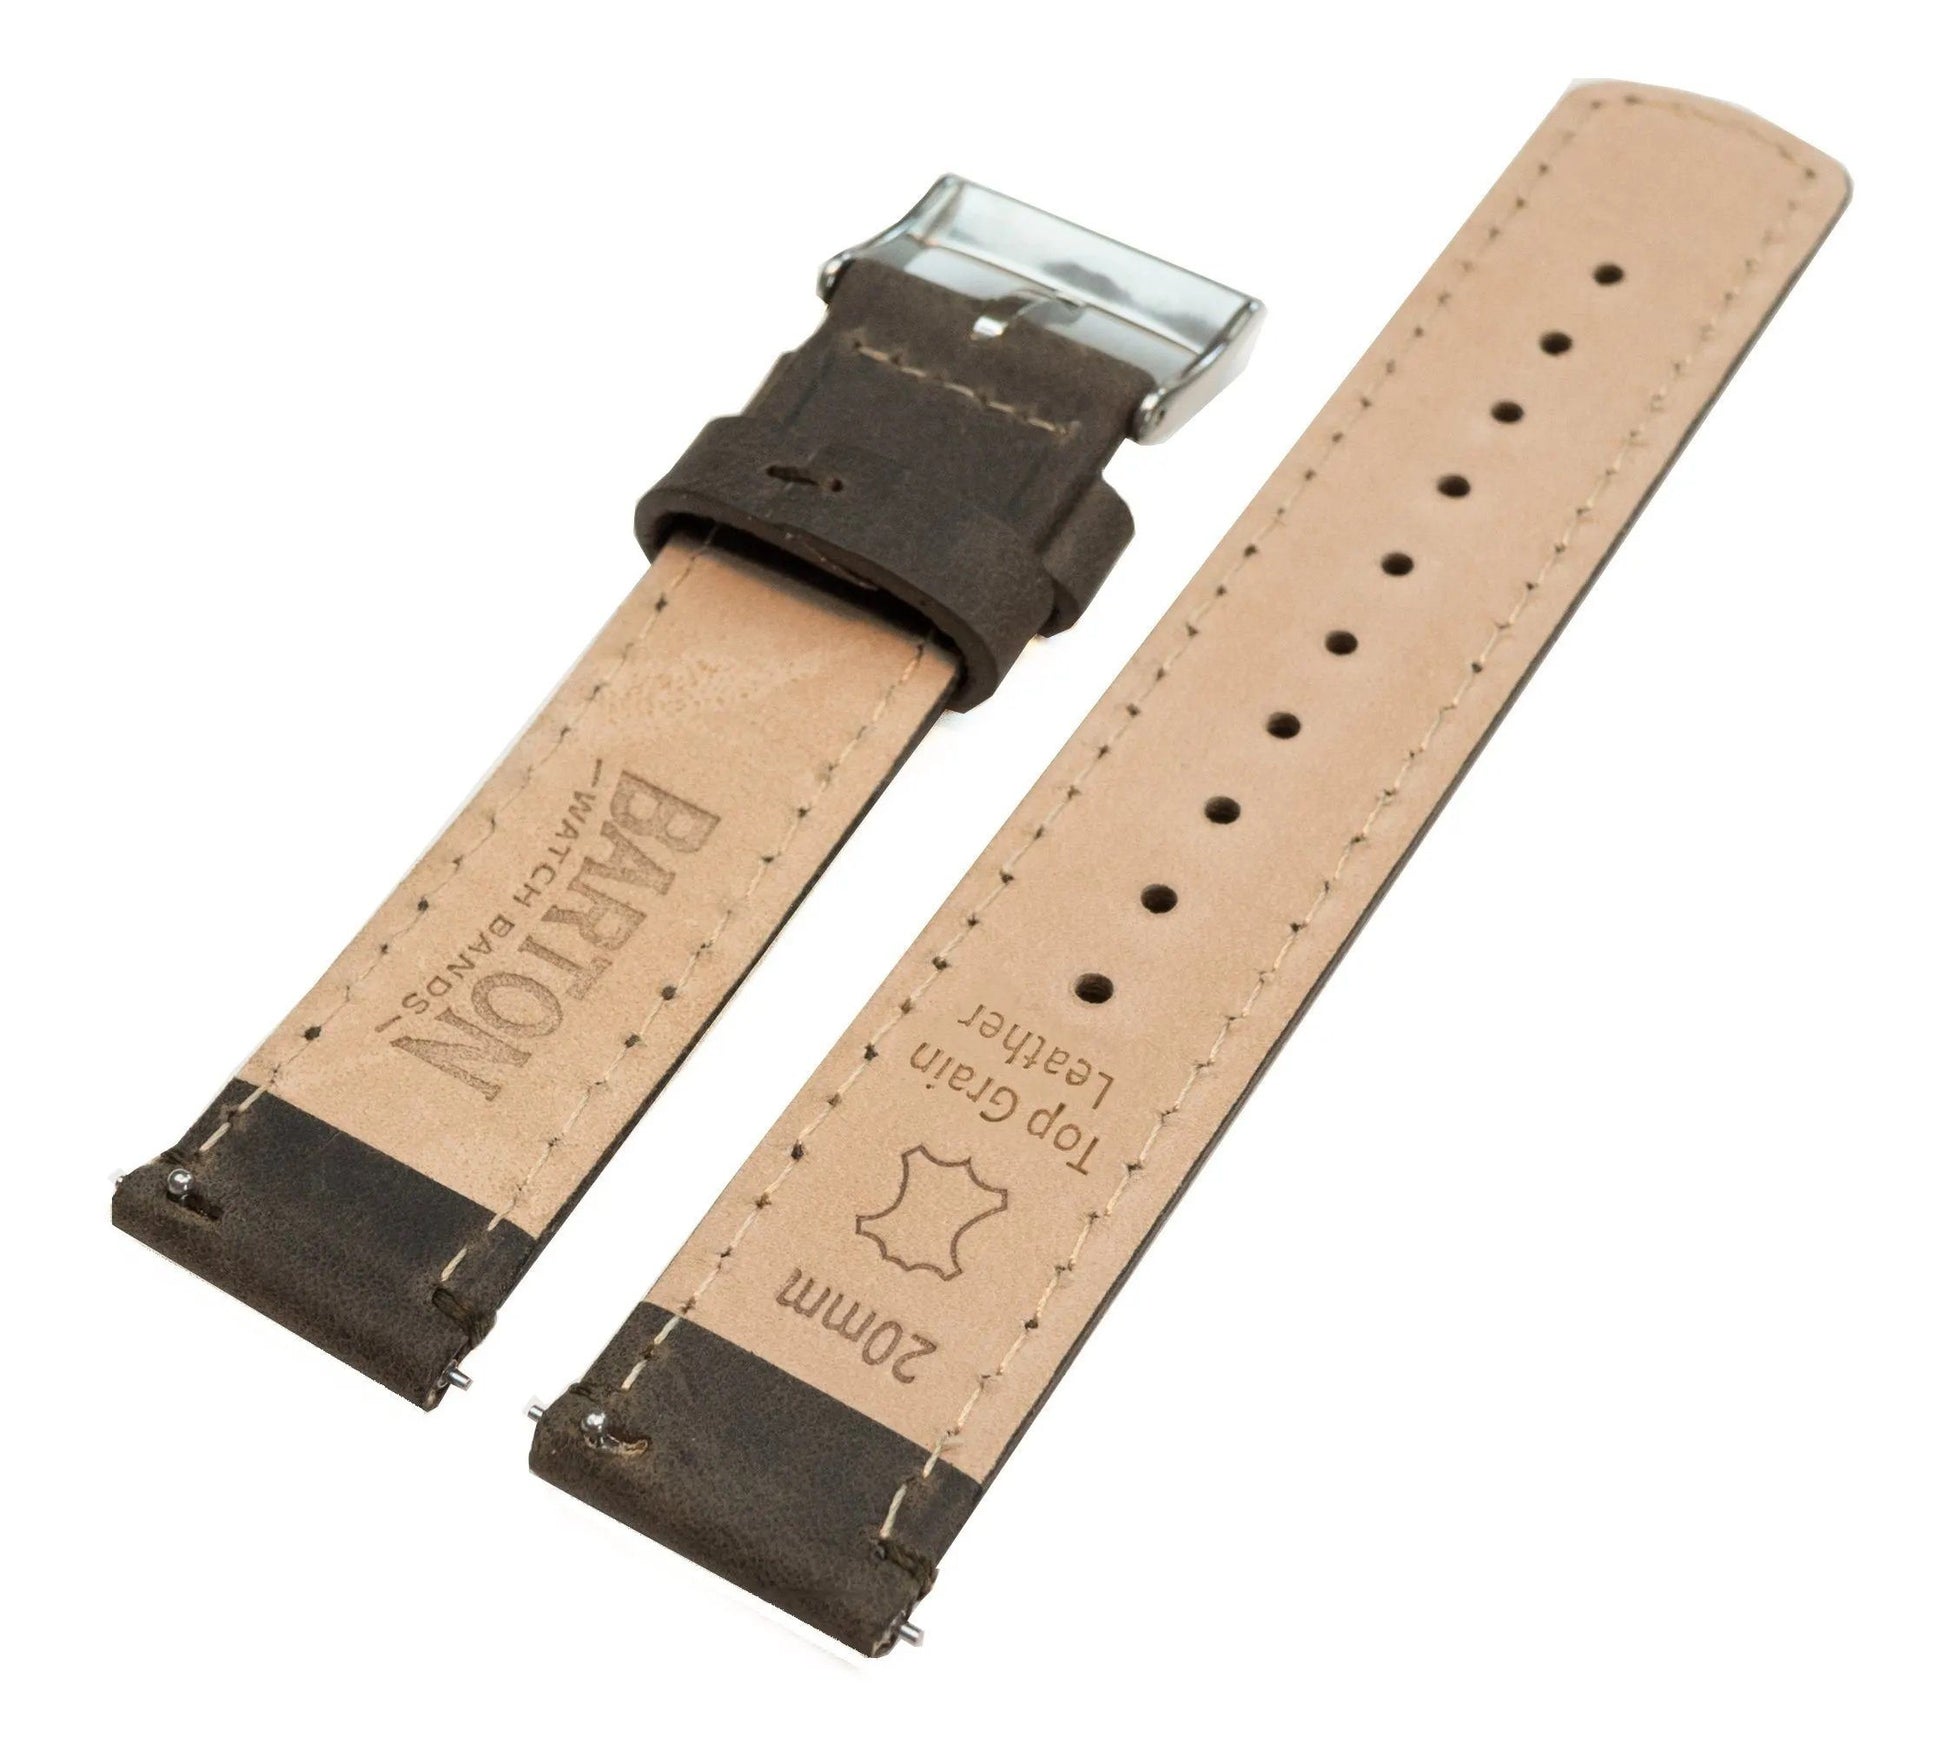 Fossil Gen 5 | Espresso Brown Leather & Stitching - Barton Watch Bands